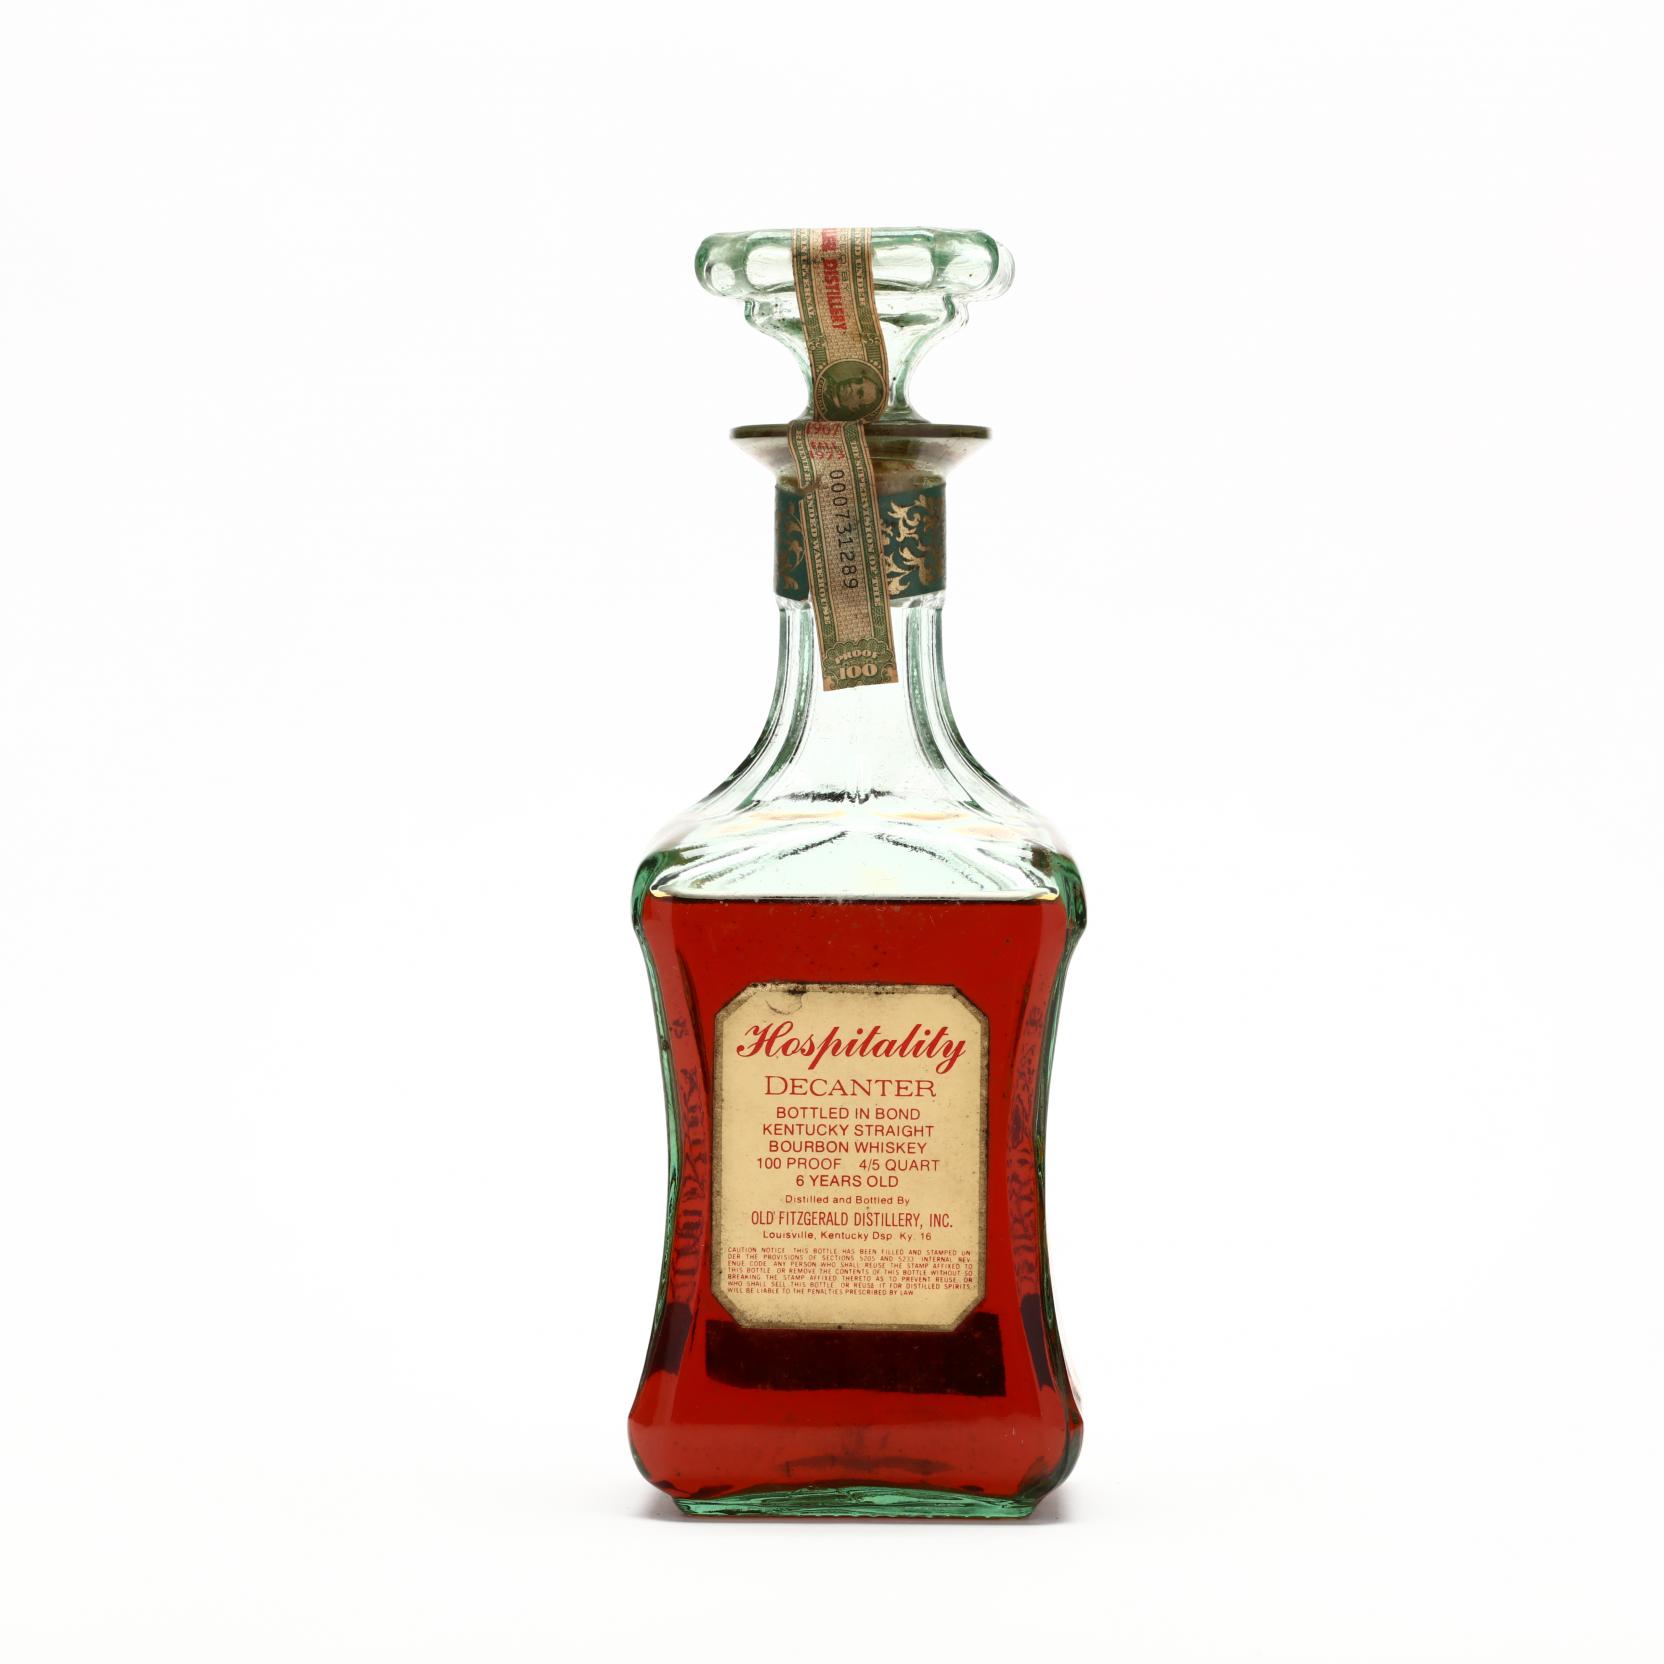 1956 Old Fitzgerald Bourbon Proof Selector Shot Glass - Louisville